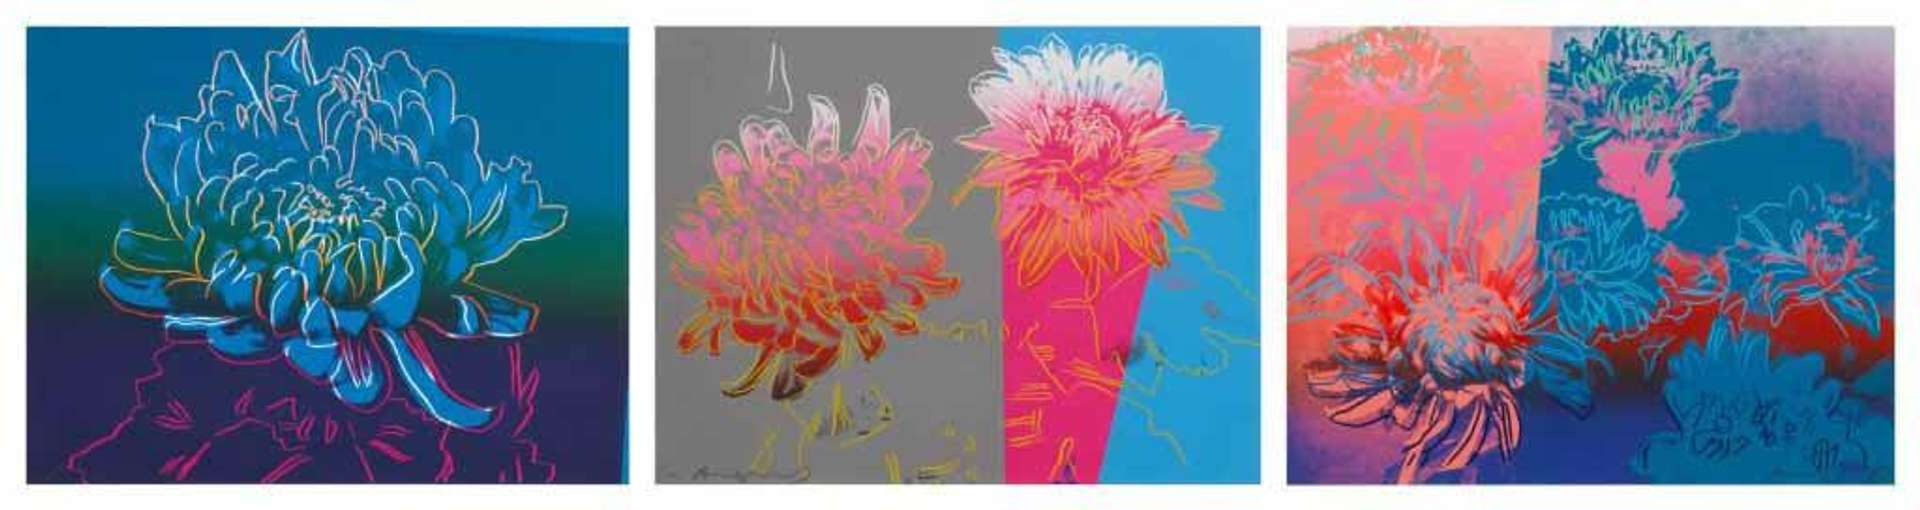 Kiku (complete set) - Signed Print by Andy Warhol 1983 - MyArtBroker